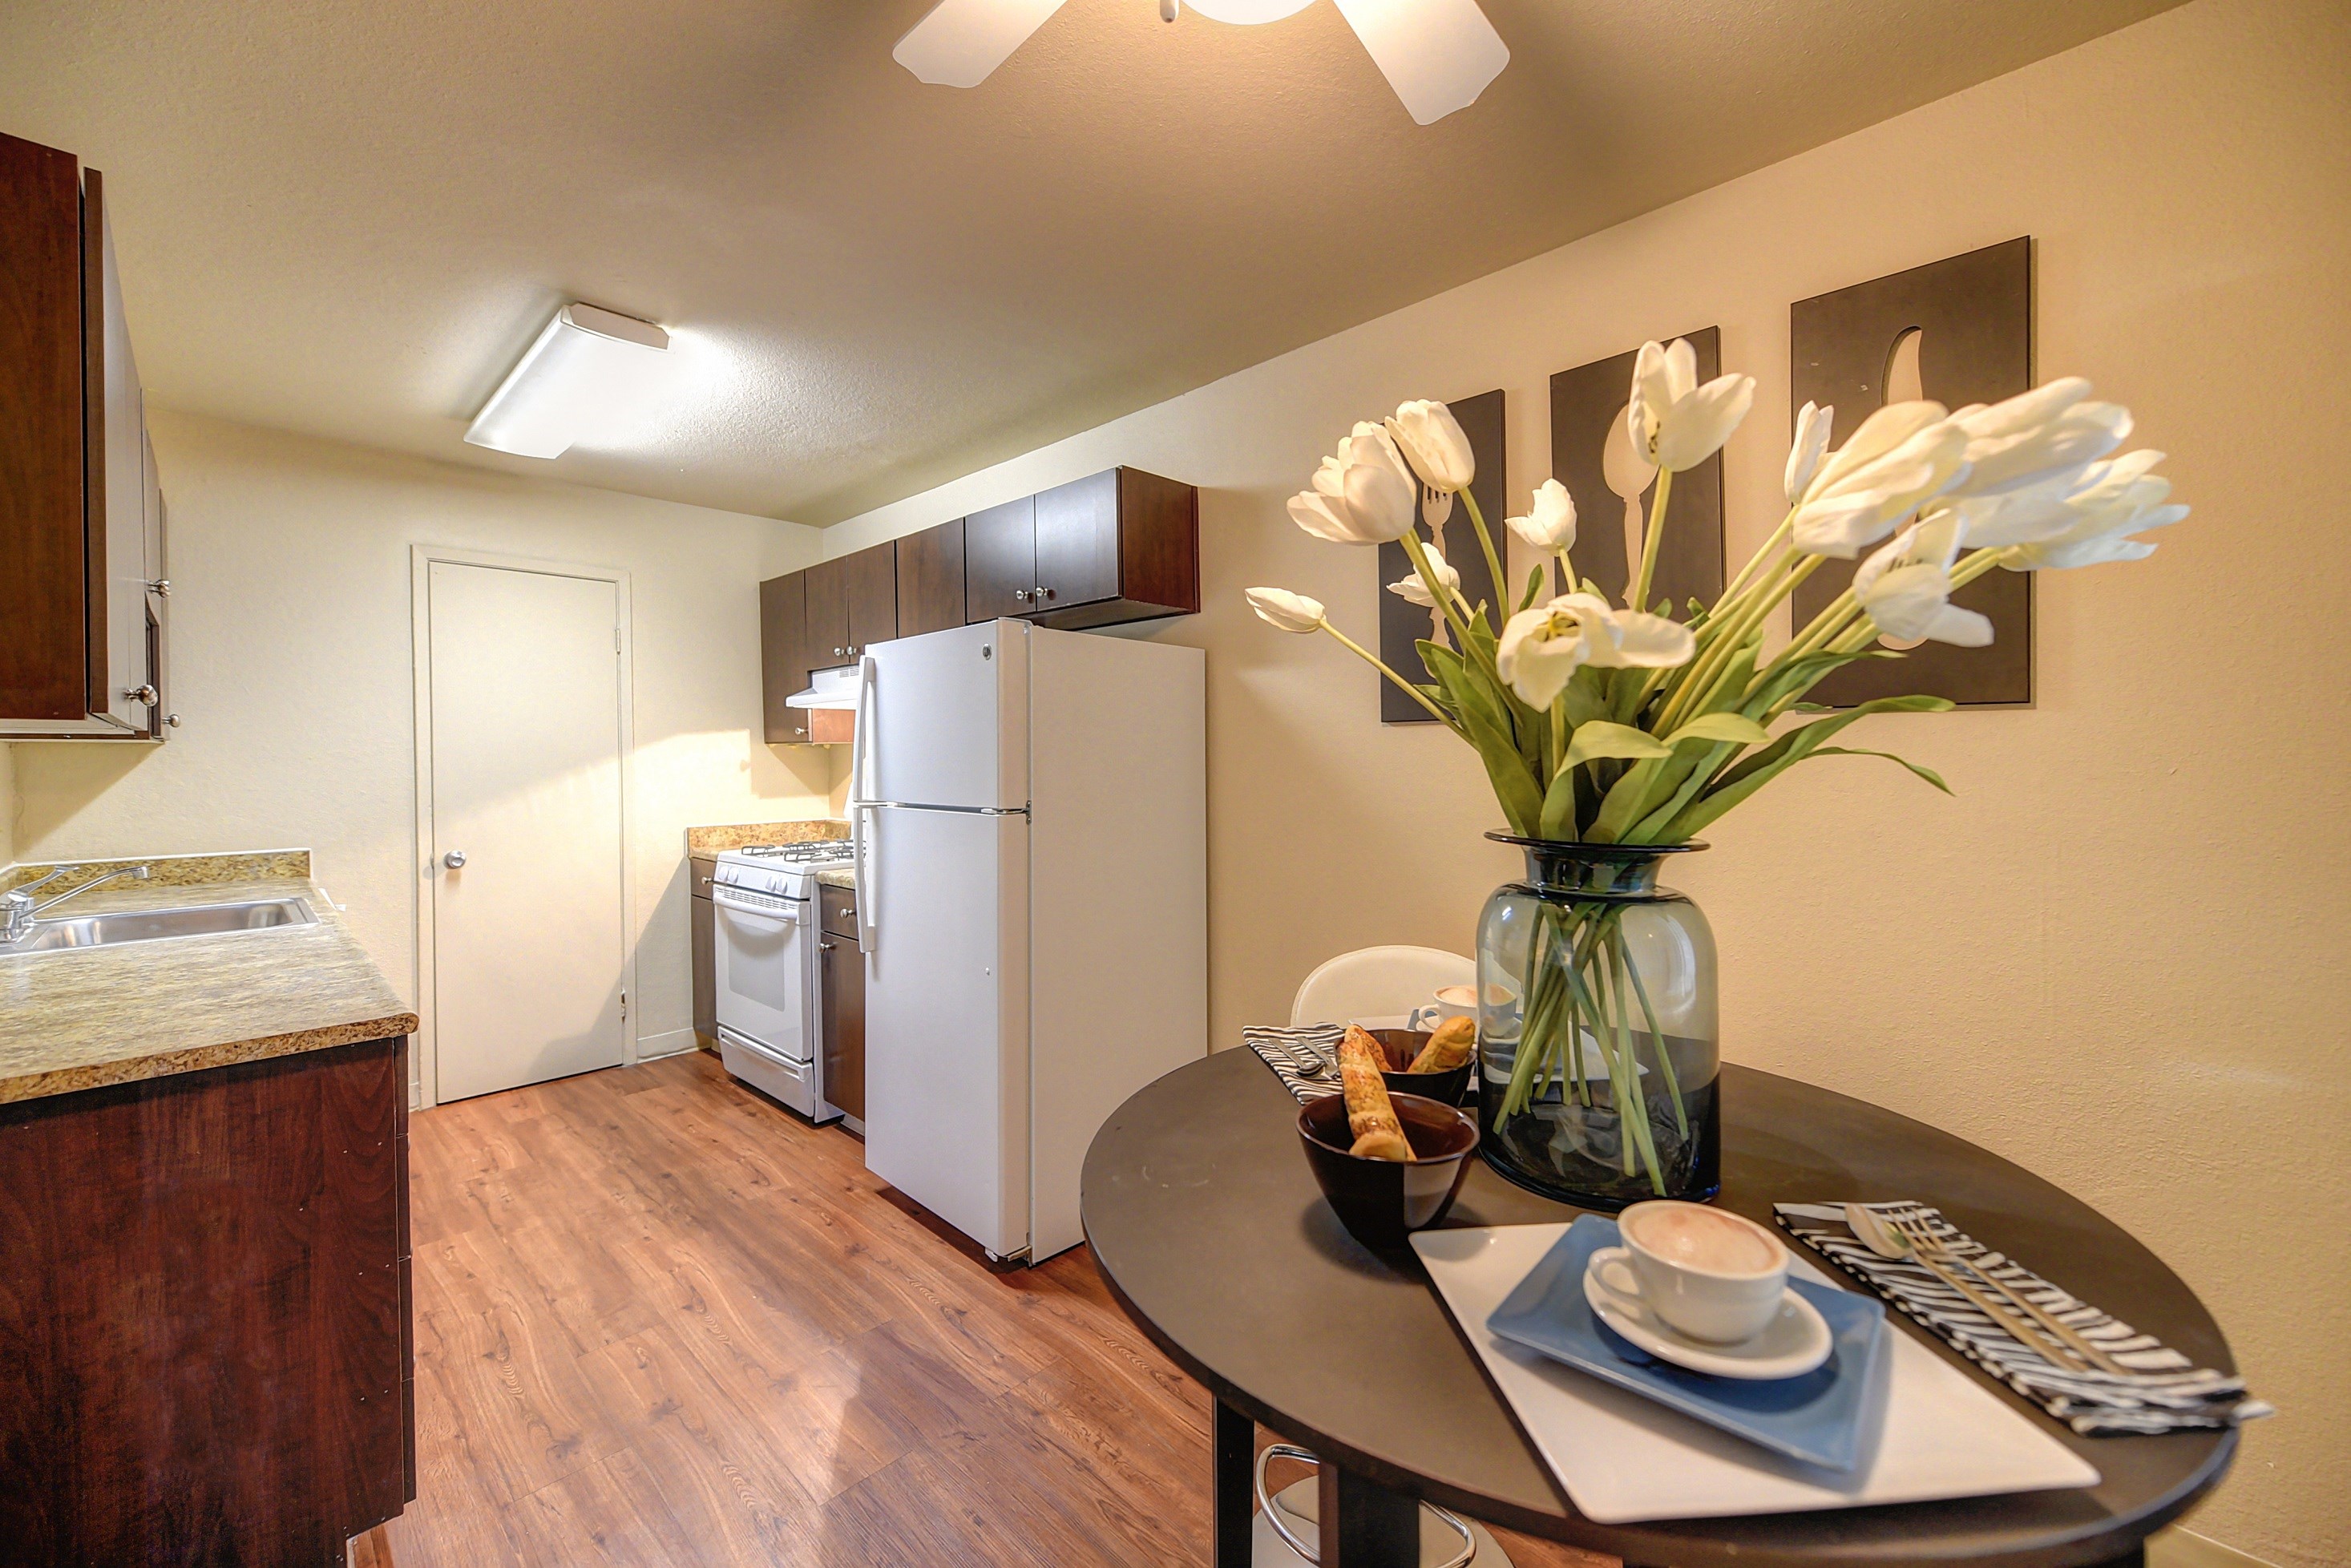 Kitchen Dining Area Room Granite Quartz Counter Countertop, Refrigerator, Gas Range Stove, Hardwood Inspired Wood Floor